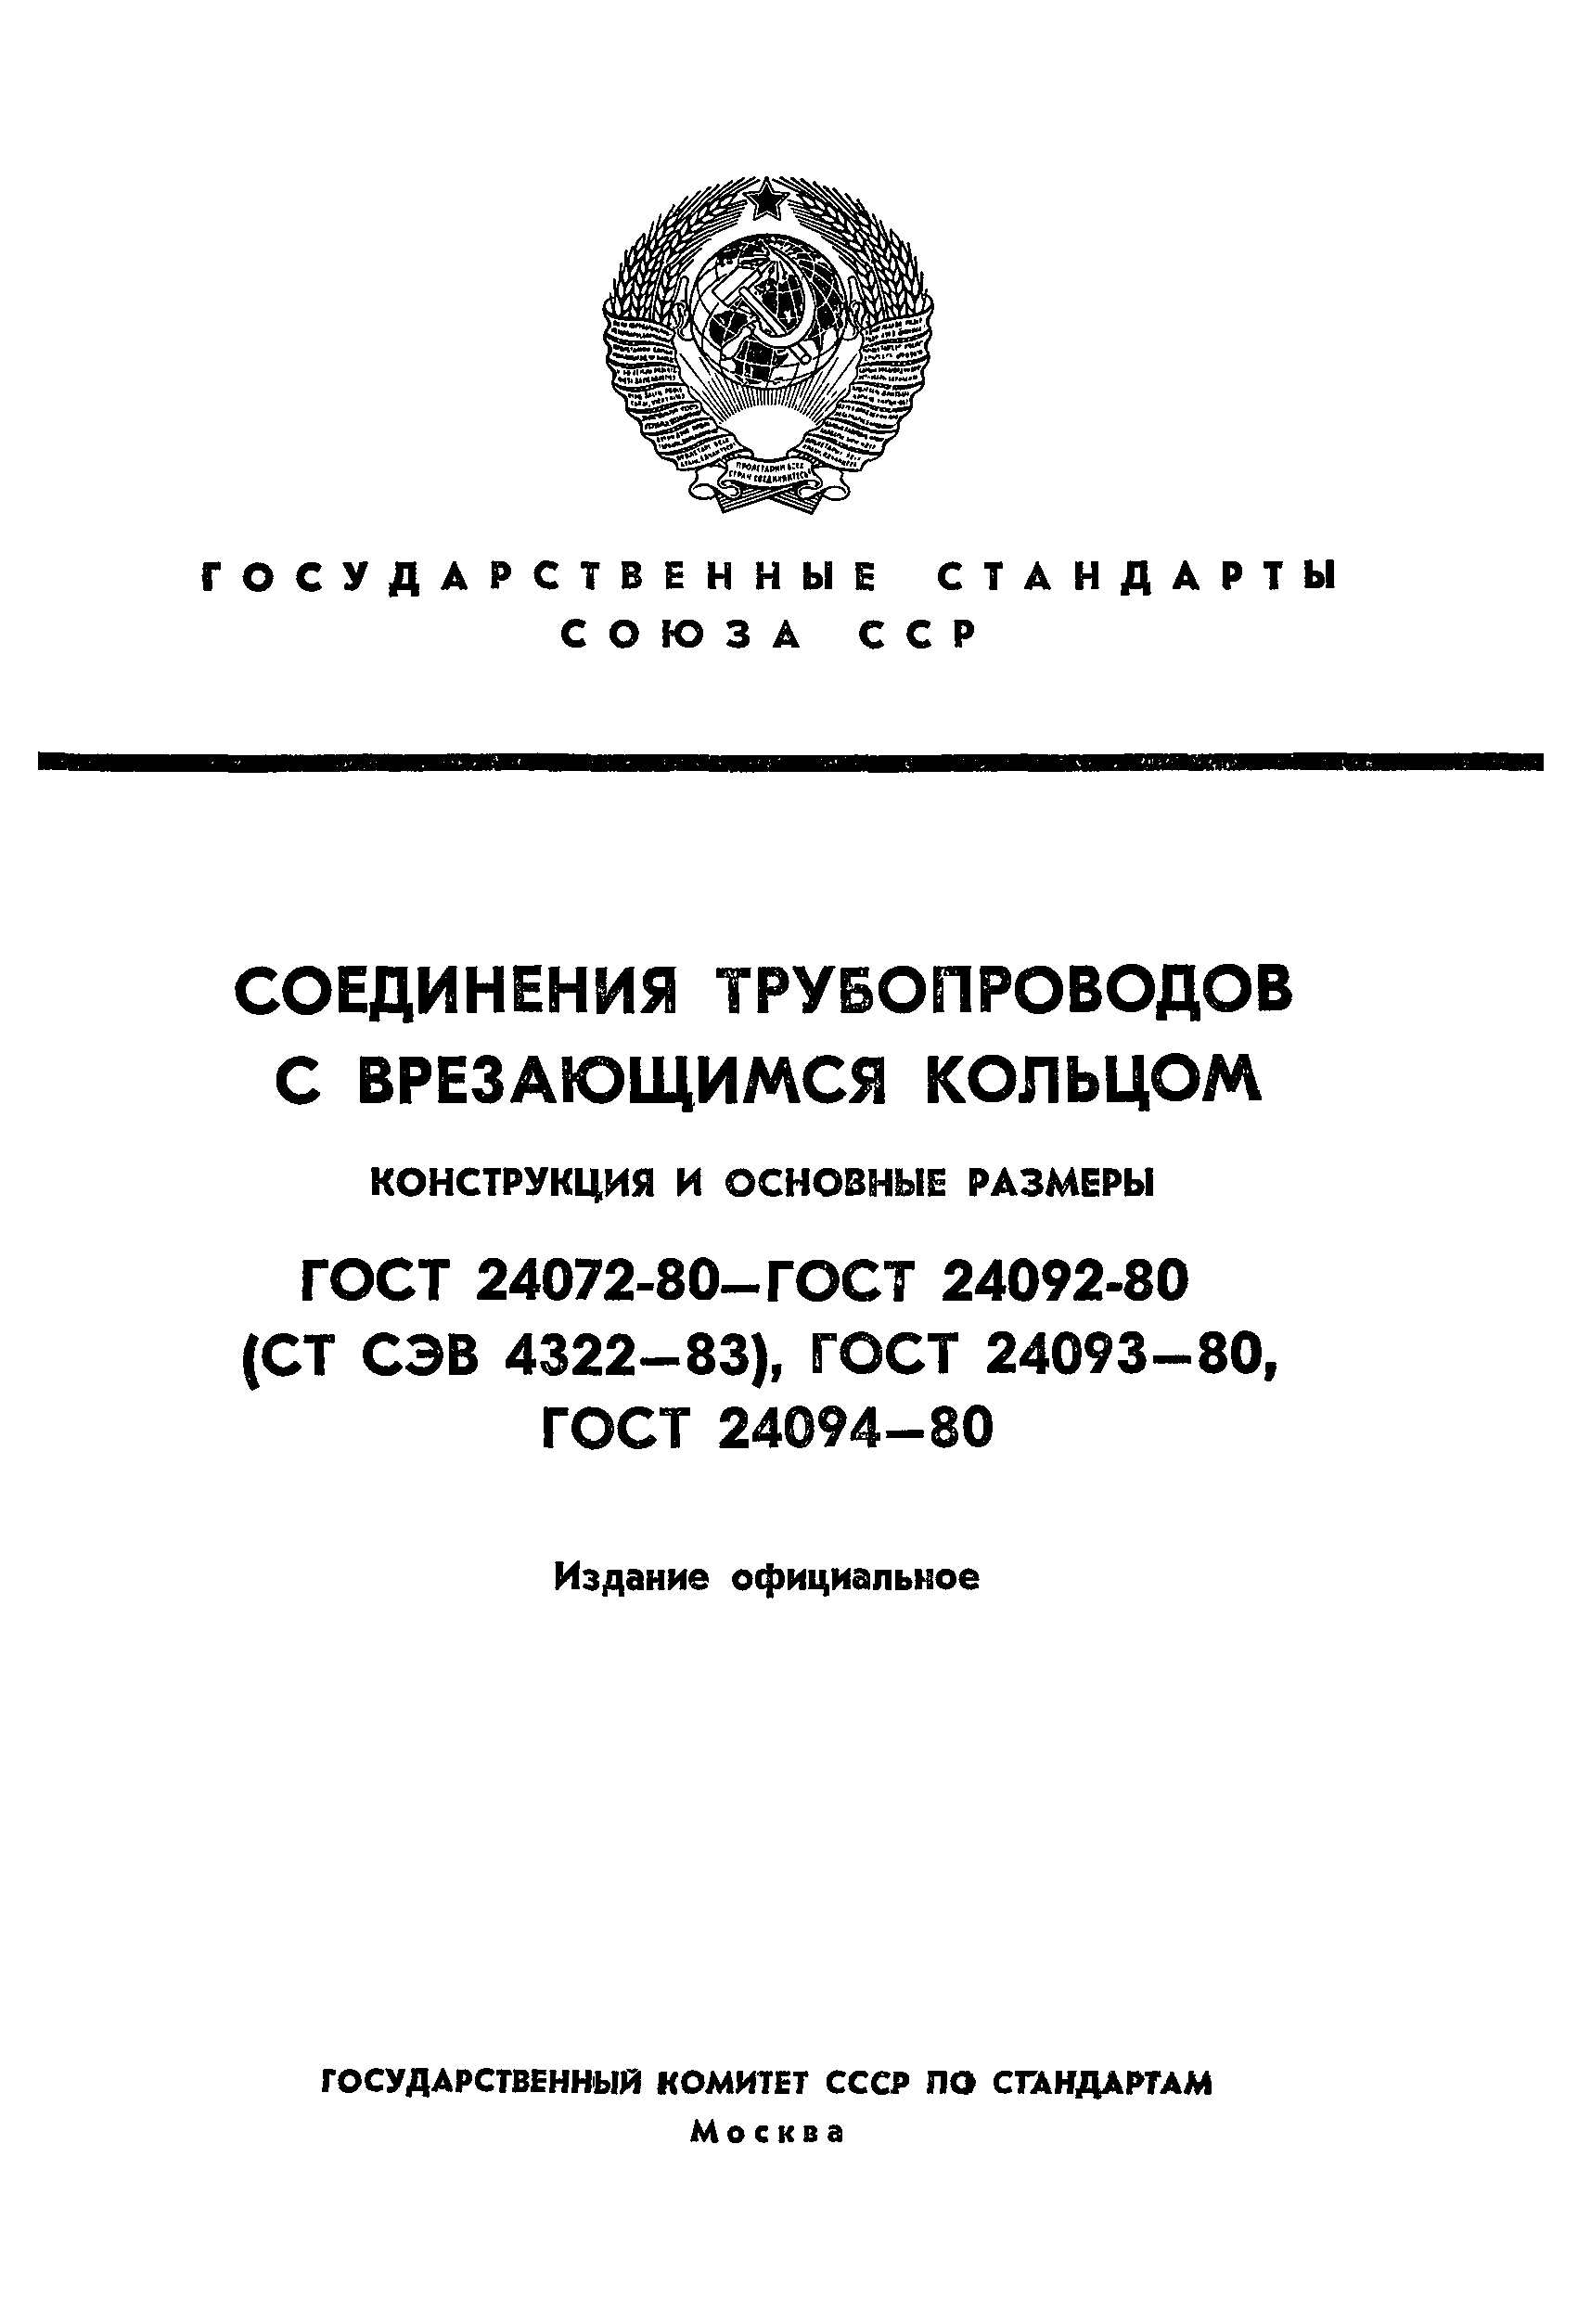 ГОСТ 24085-80